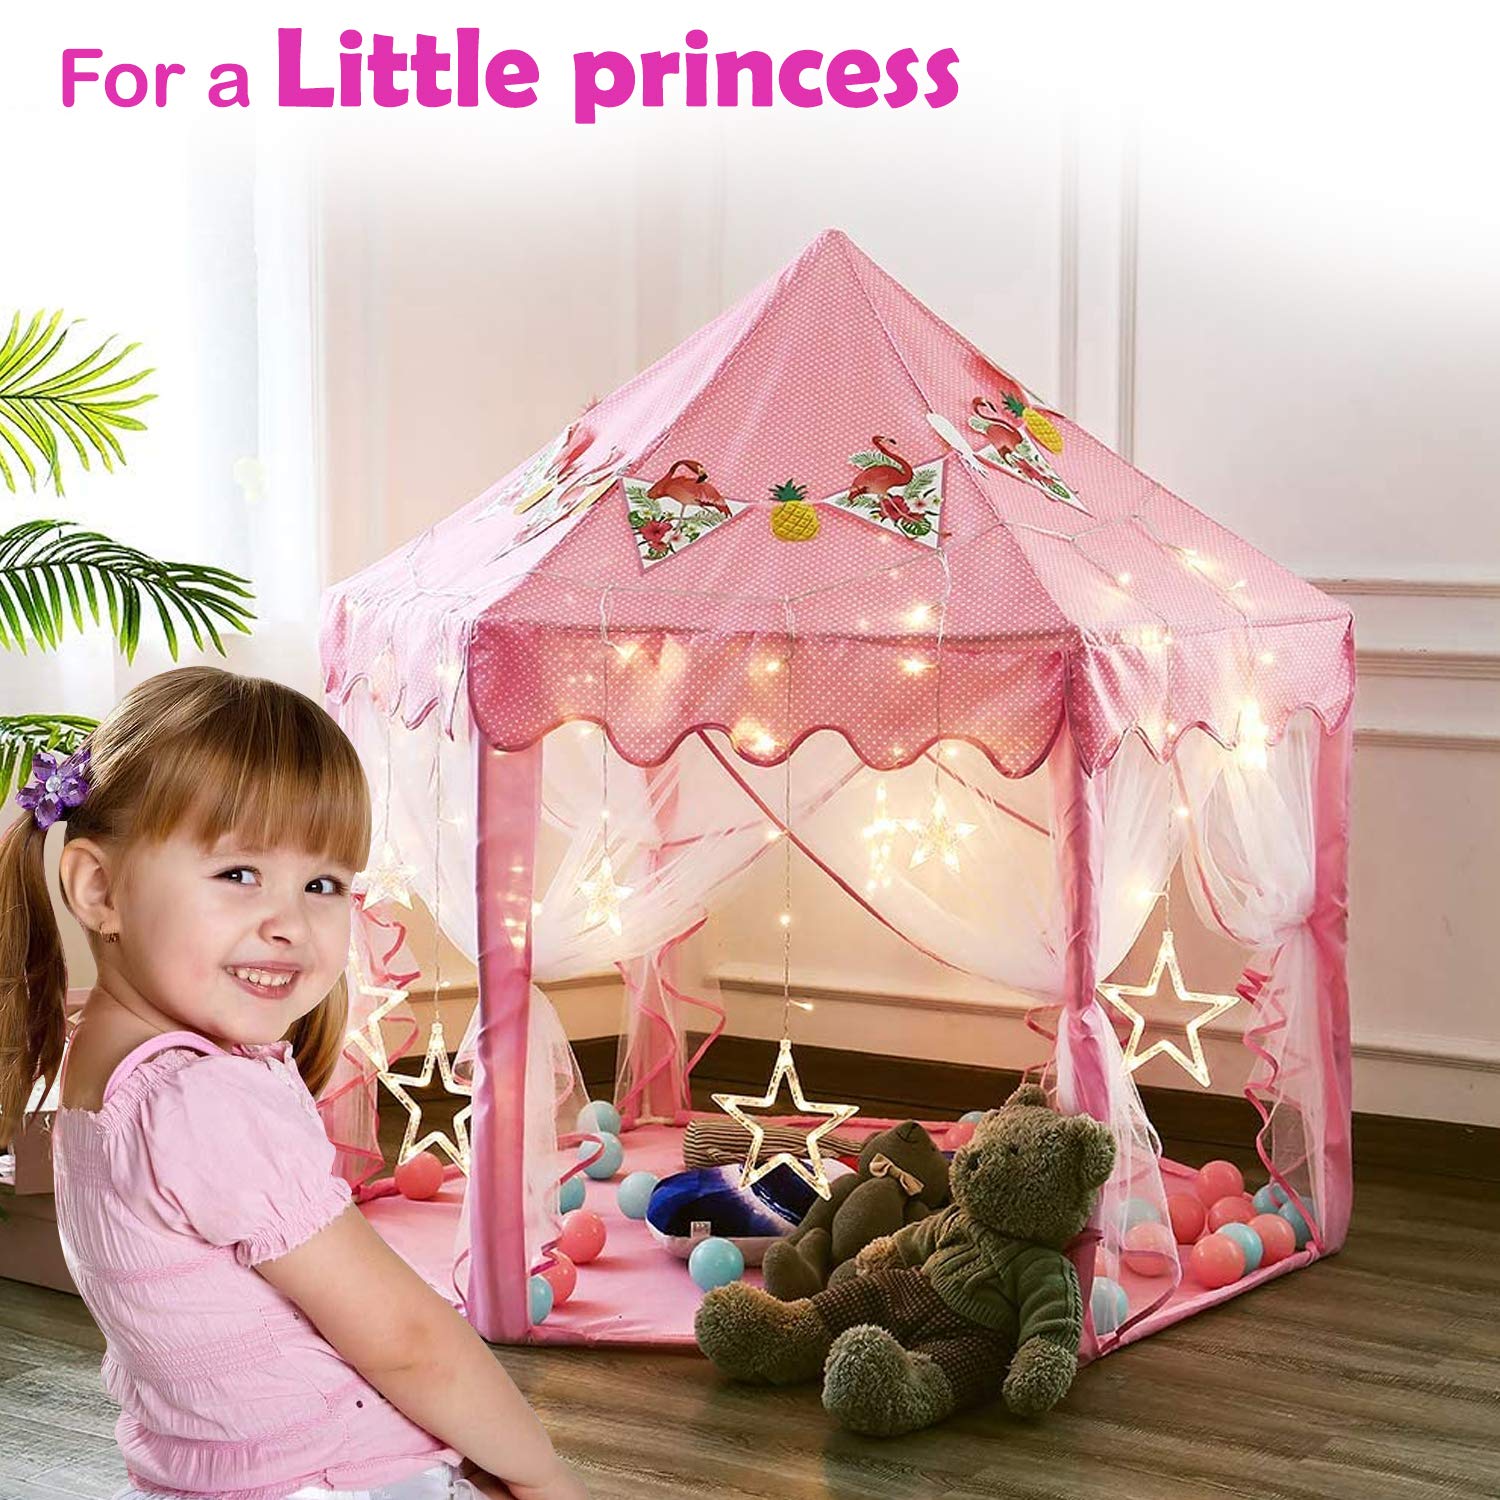 FAIRY TALE TENT Large Durable Princess Castle Tent for Boys Girls